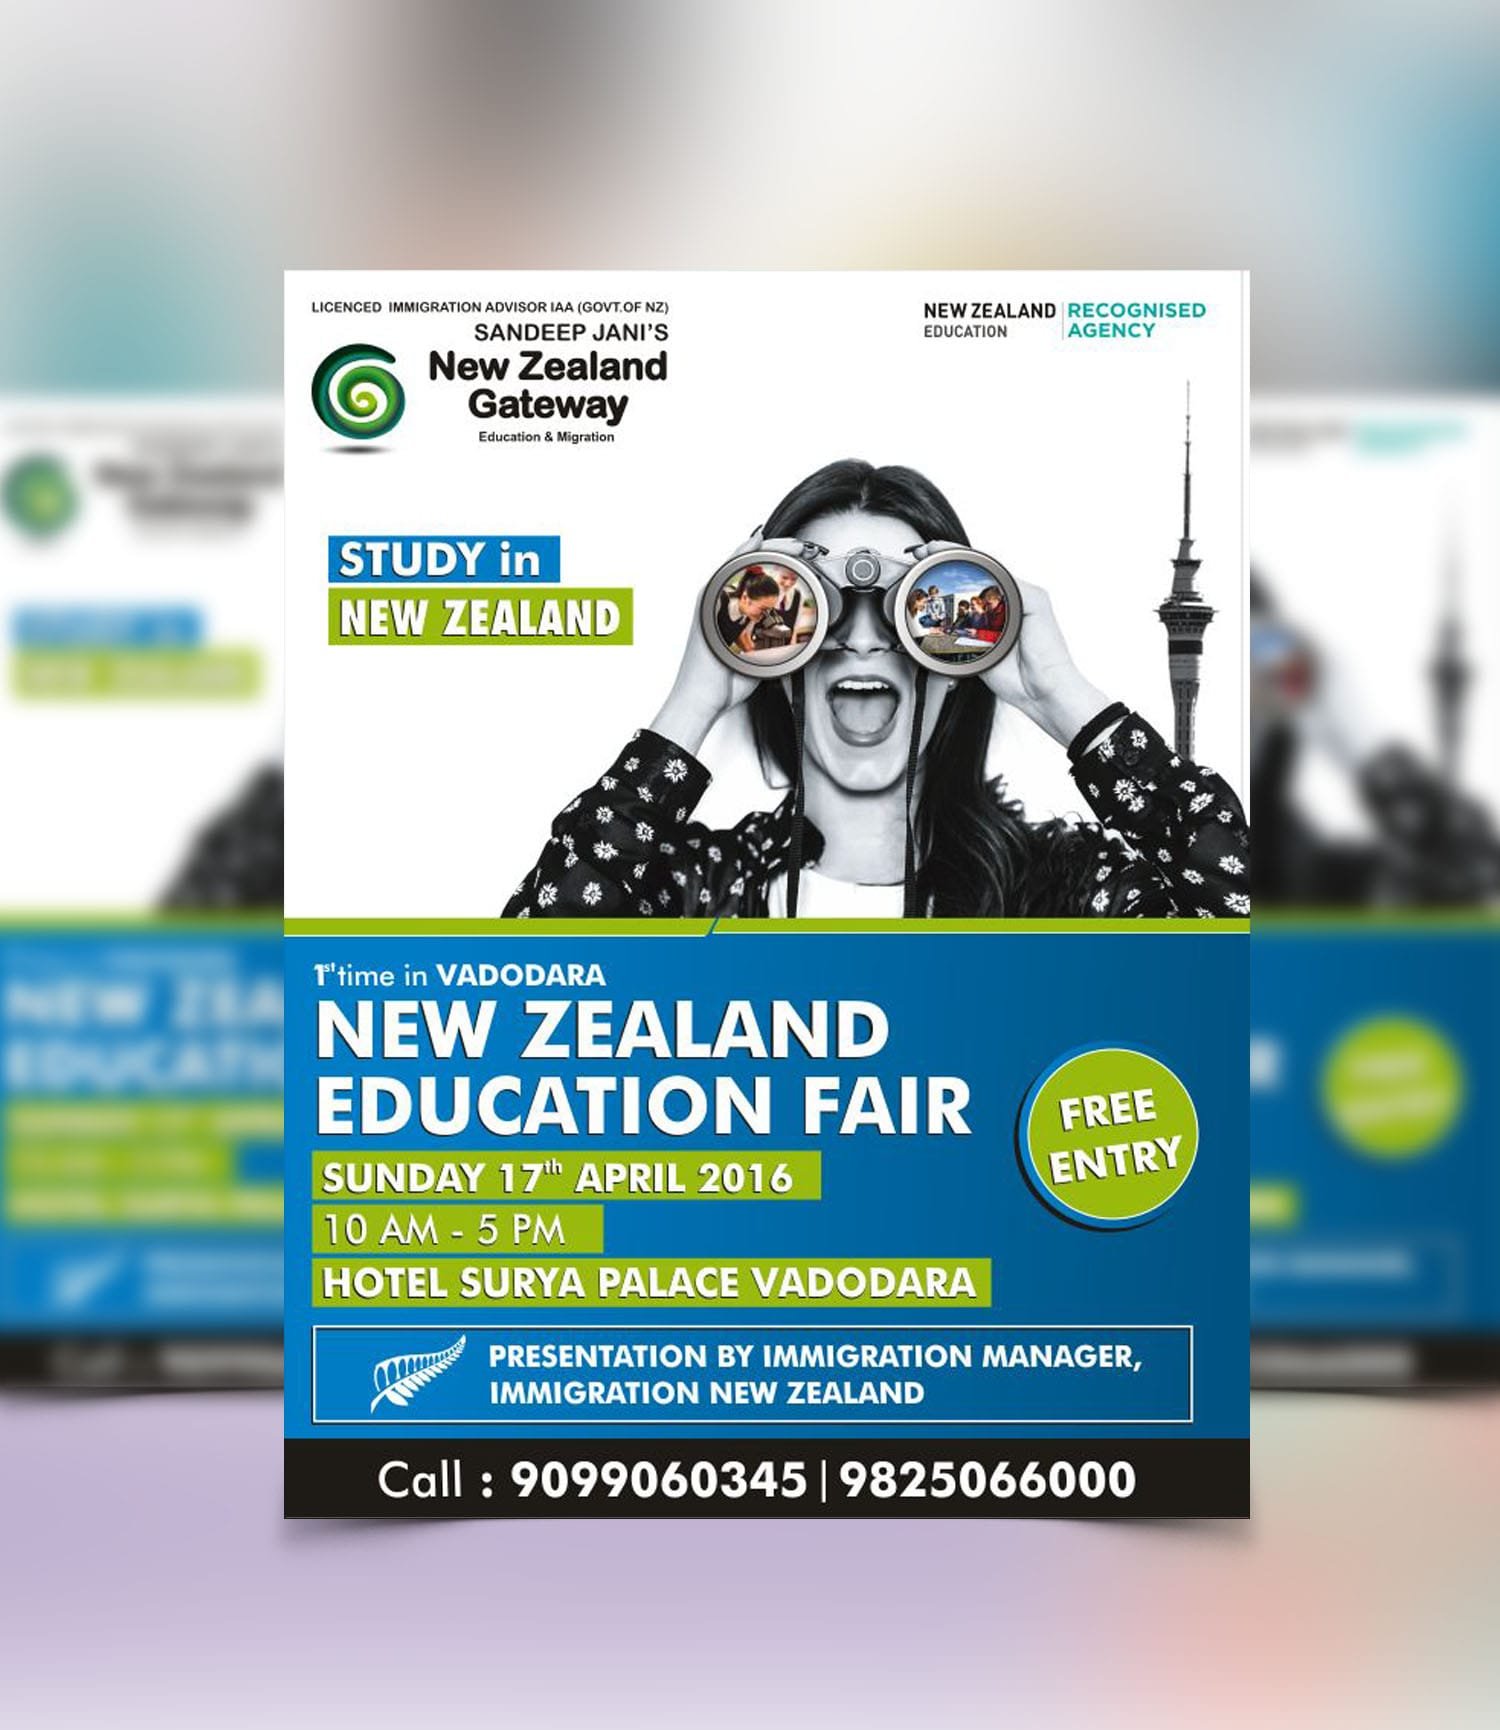 New Zealand gateway _Flyer Cover